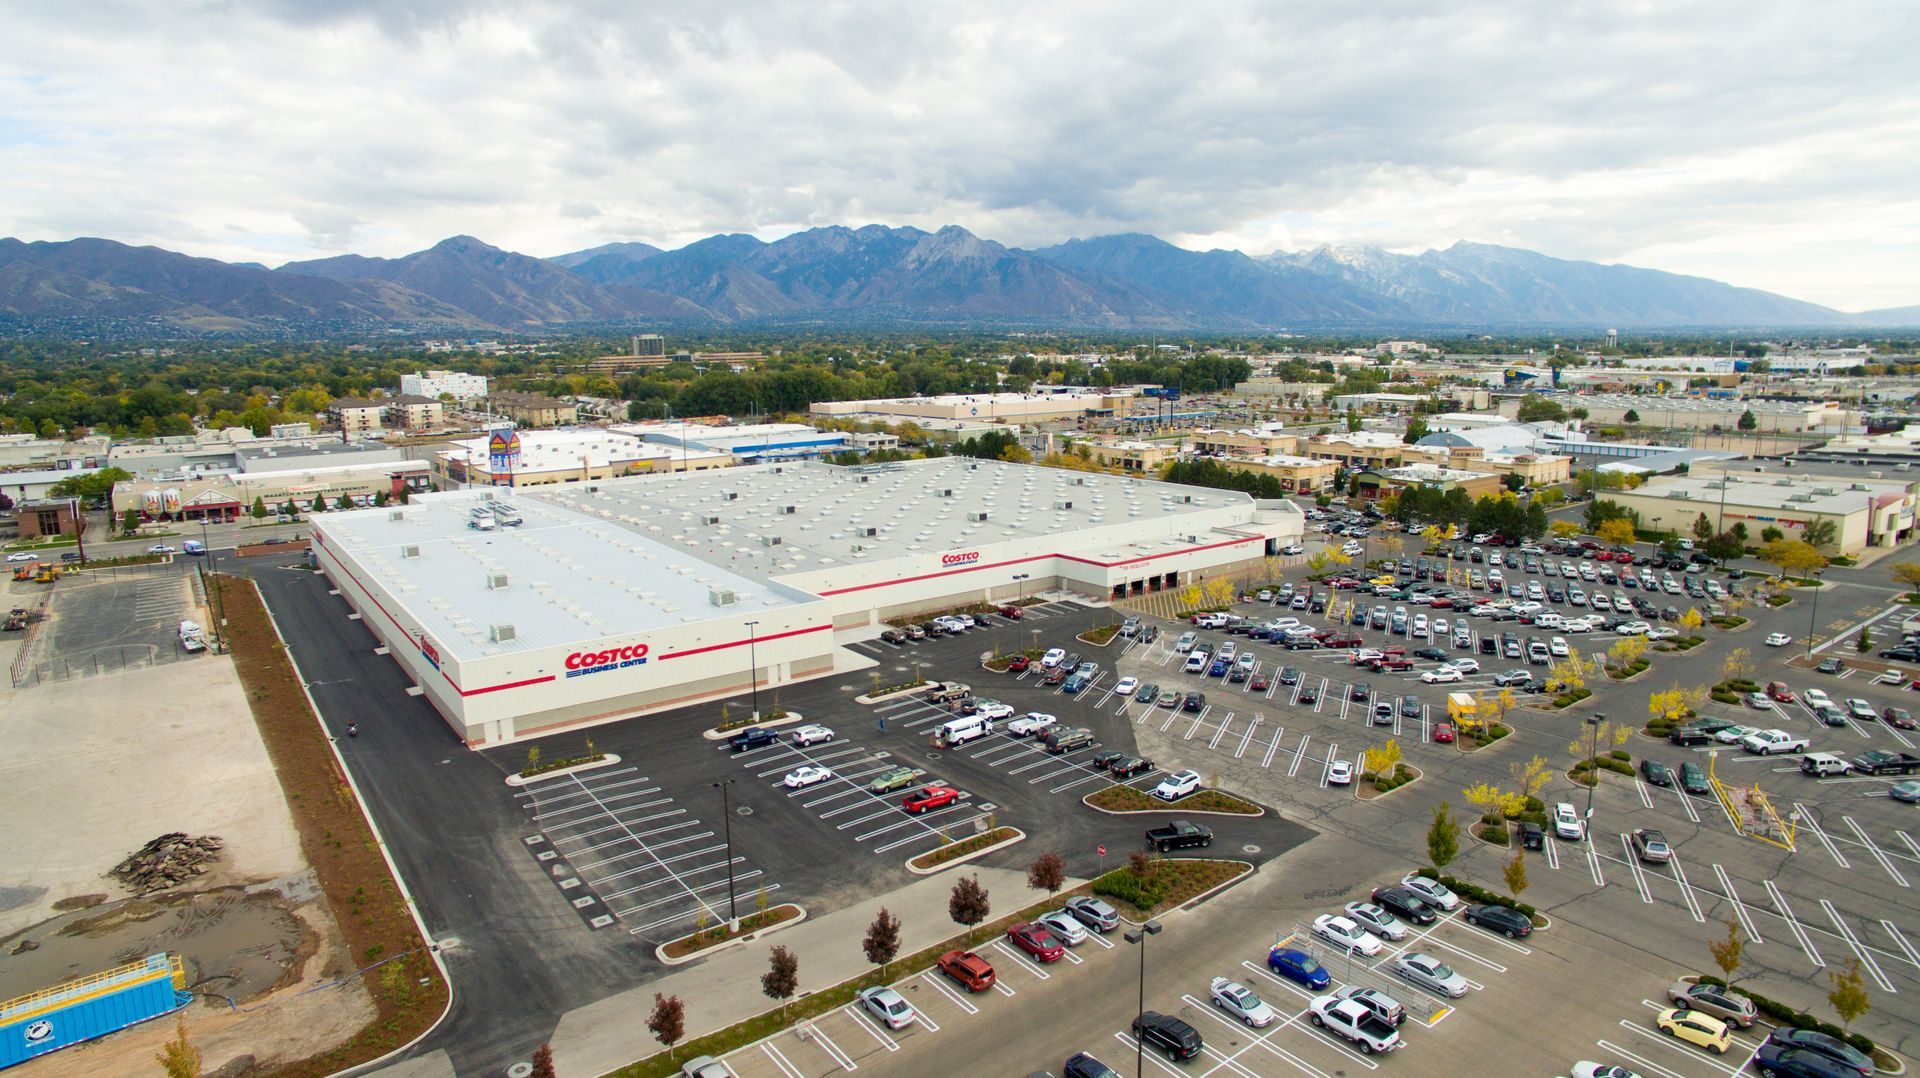 
World’s Largest Costco Store, world record in Salt Lake City, Utah